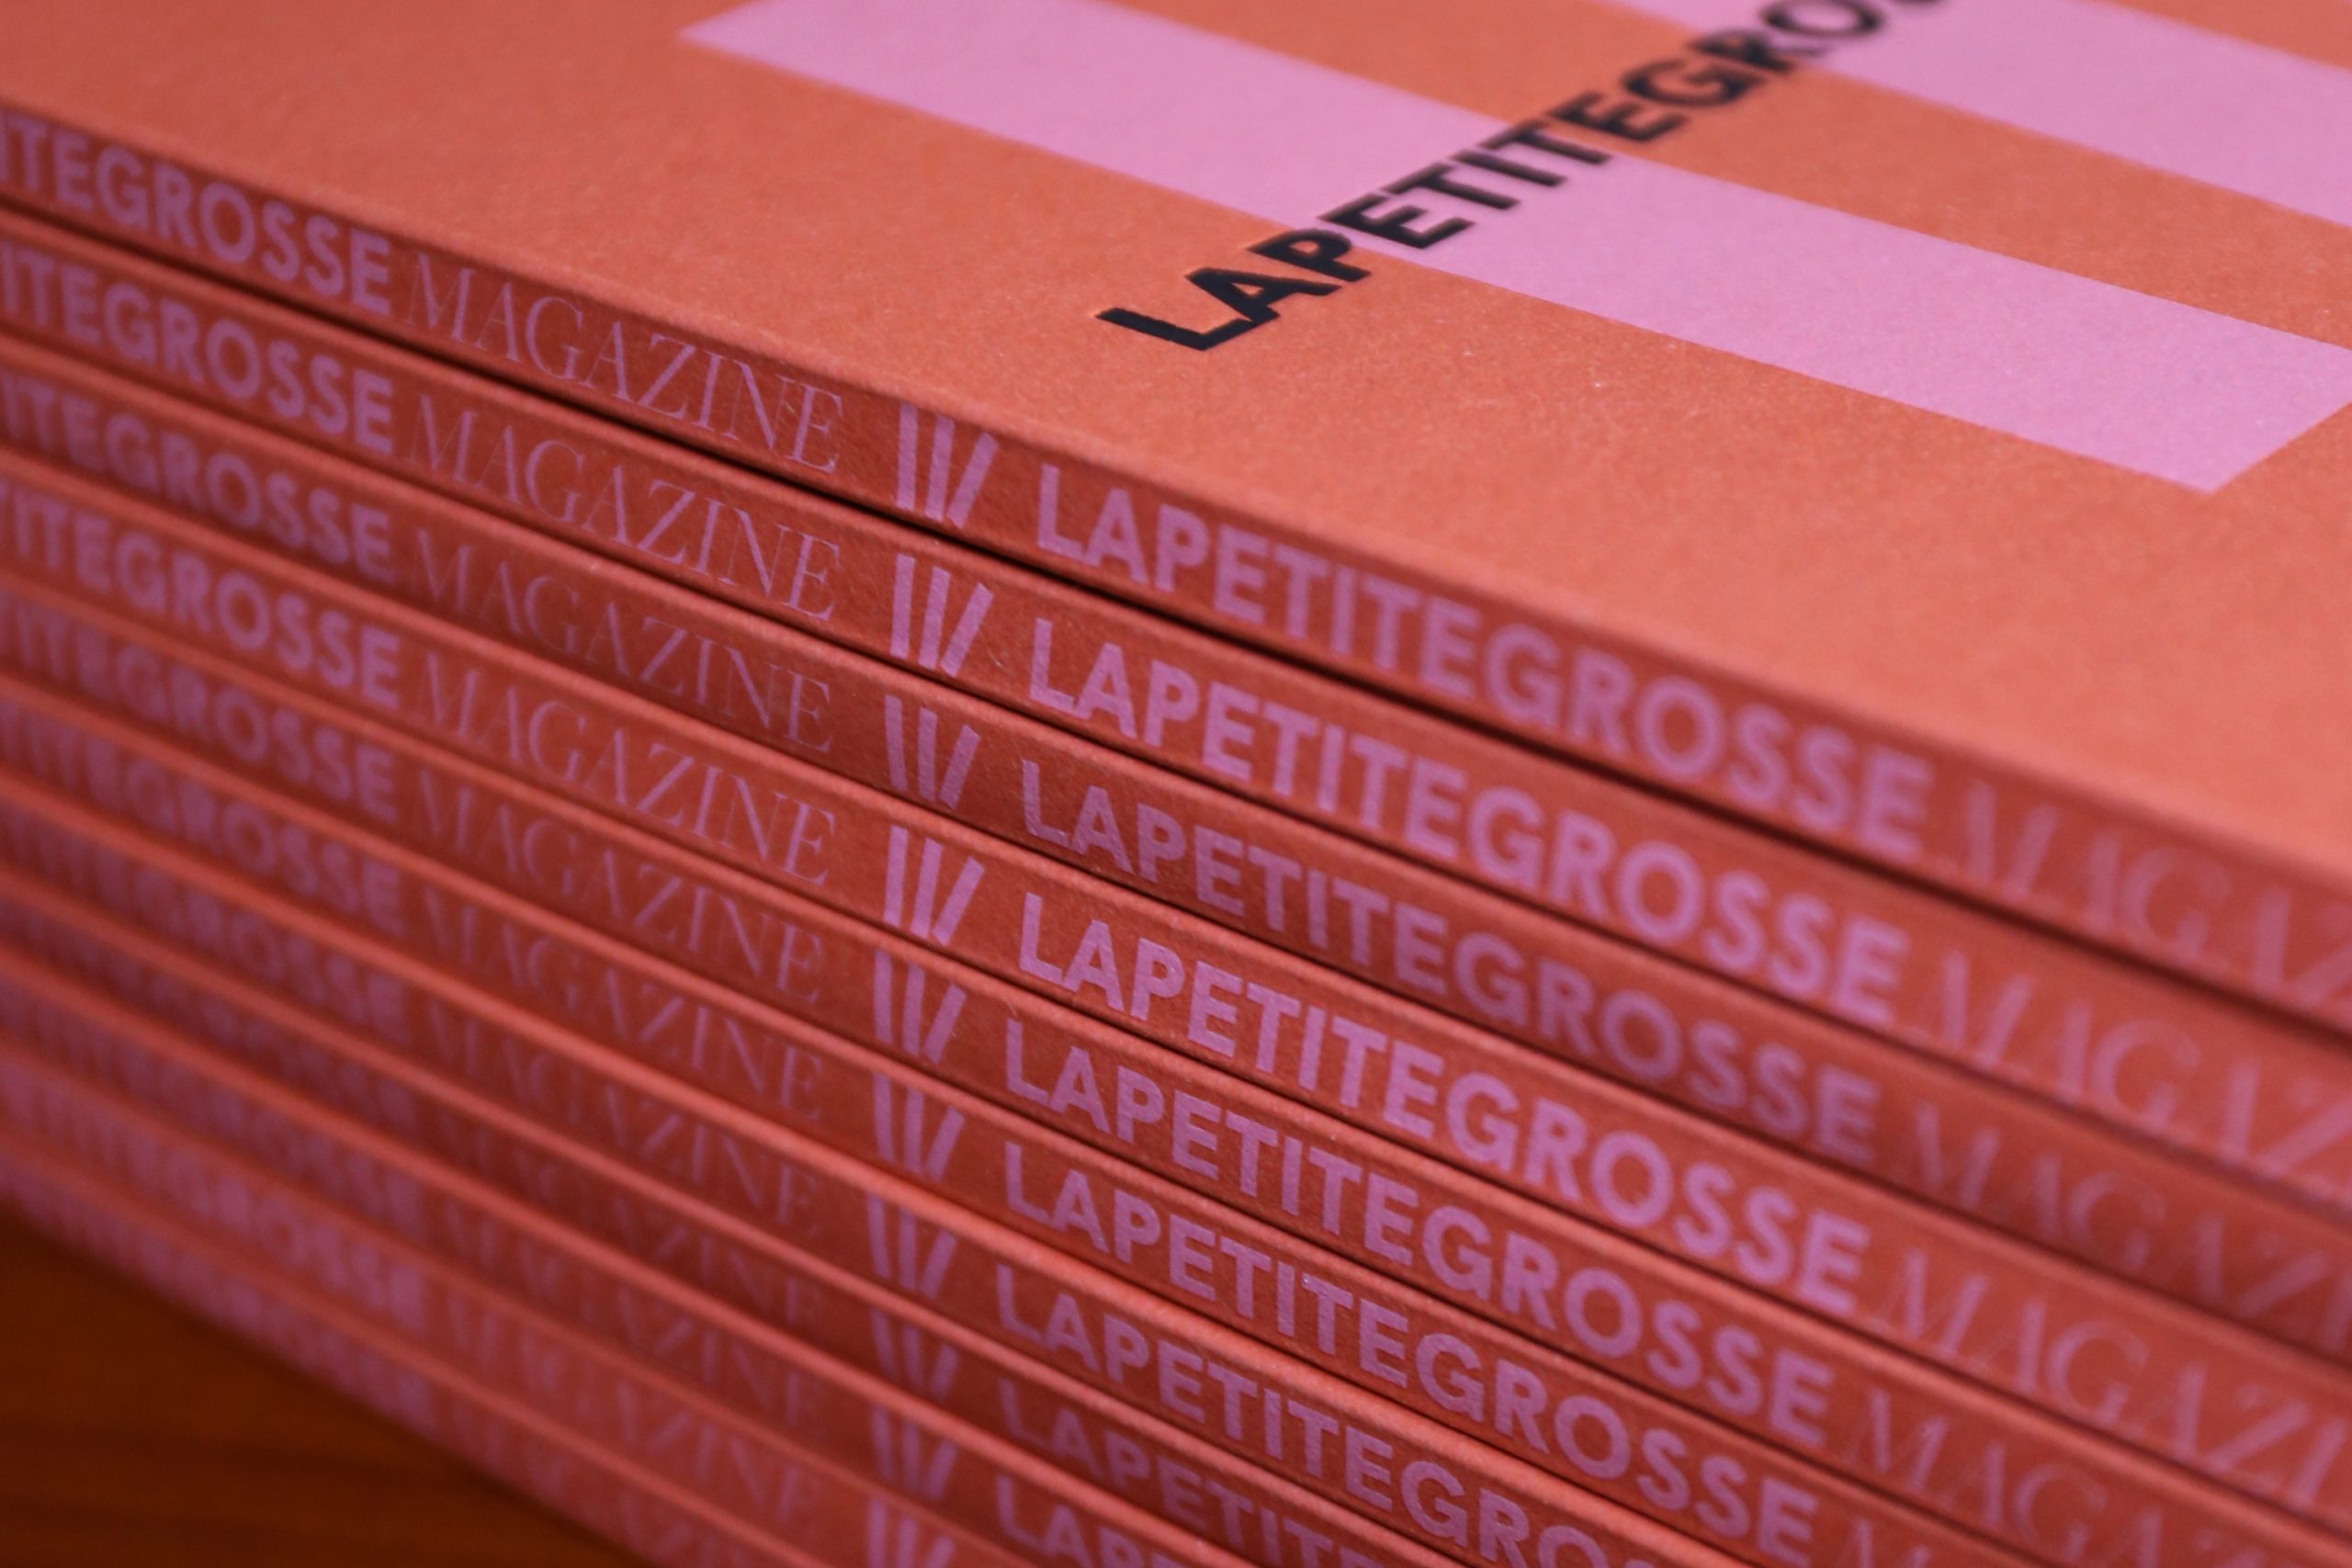 Lapetitegrosse Magazine 3